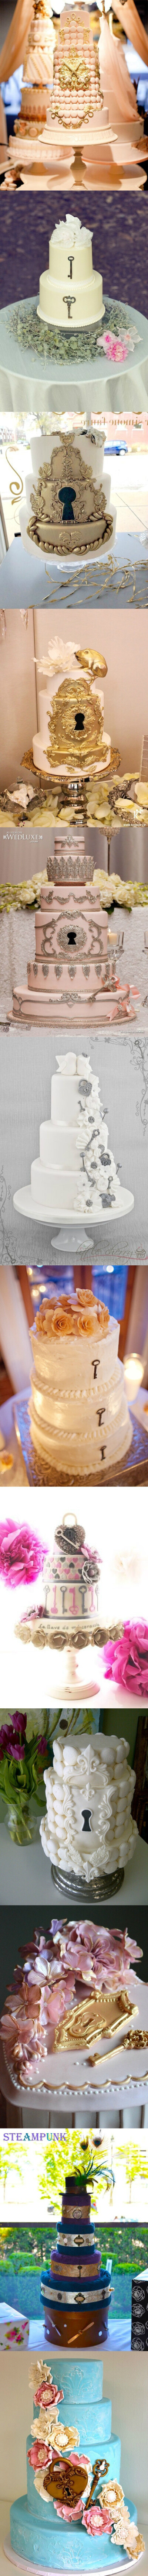 #婚礼布置#12款钥匙元素的婚礼翻糖蛋糕 更多: http://www.lovewith.me/share/detail/all/31871